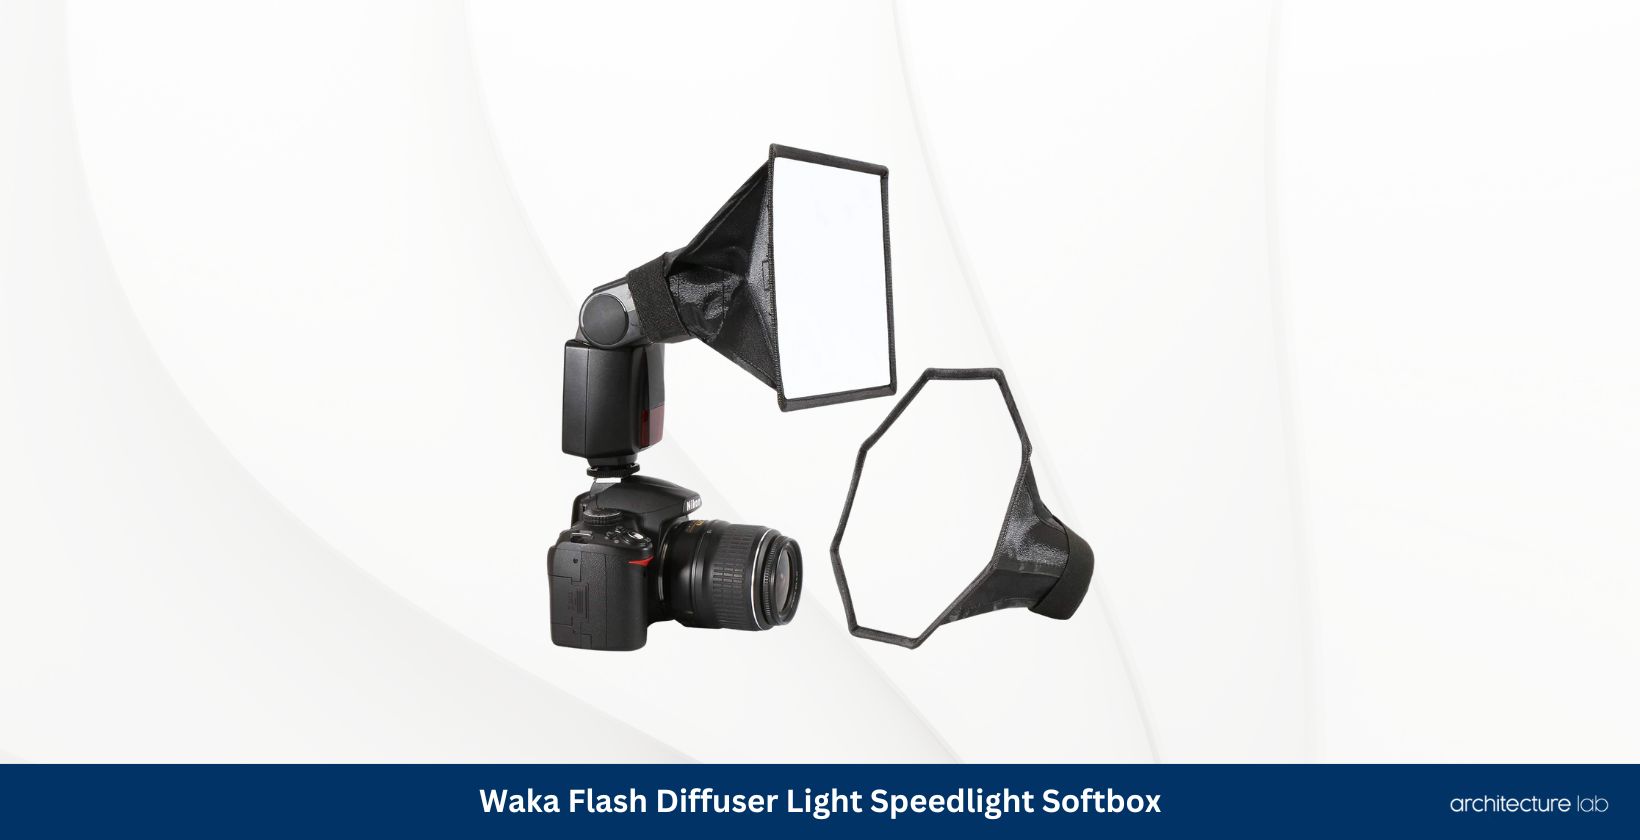 Waka flash diffuser light speedlight